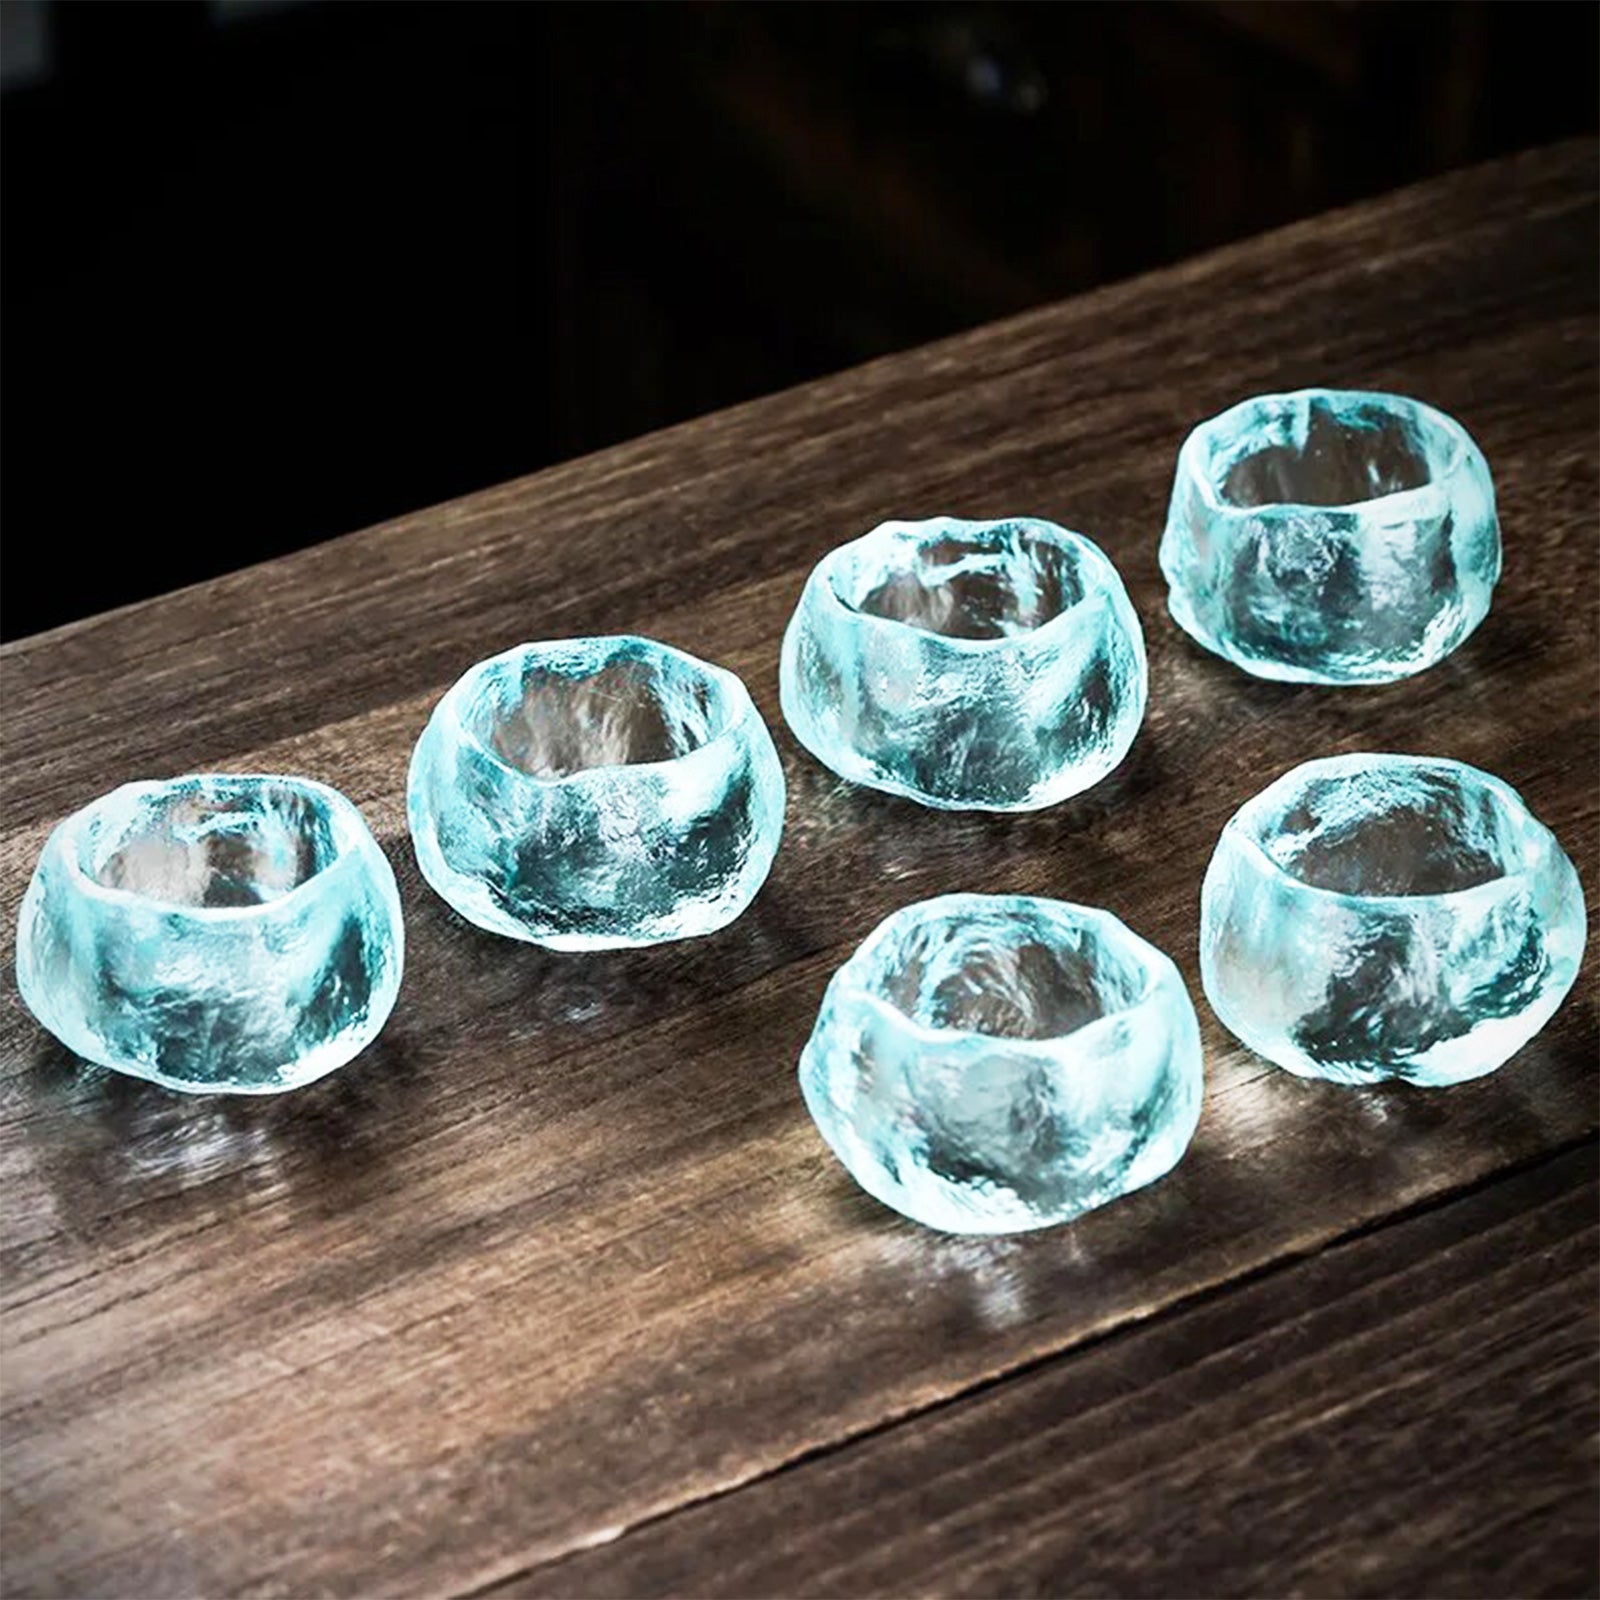 Frozen Look Tea Cup Made From Sky Green Heat-Resistant Glass